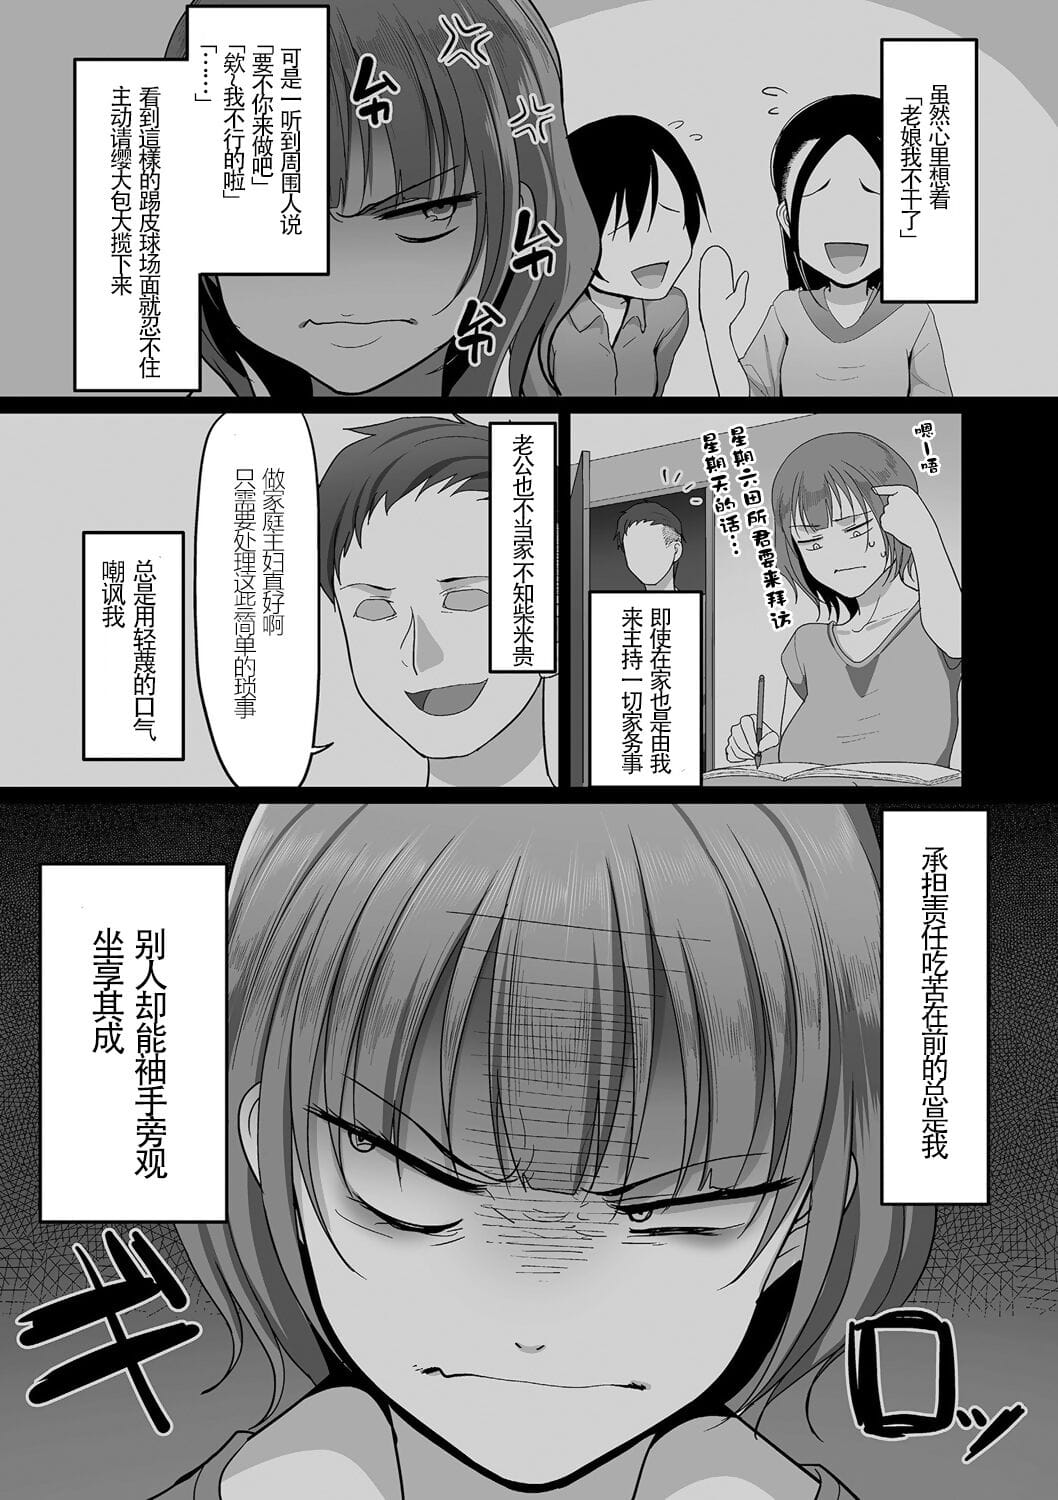 S-ken K-shi Shakaijin Volleyball Circle no Jijou 3 page 1